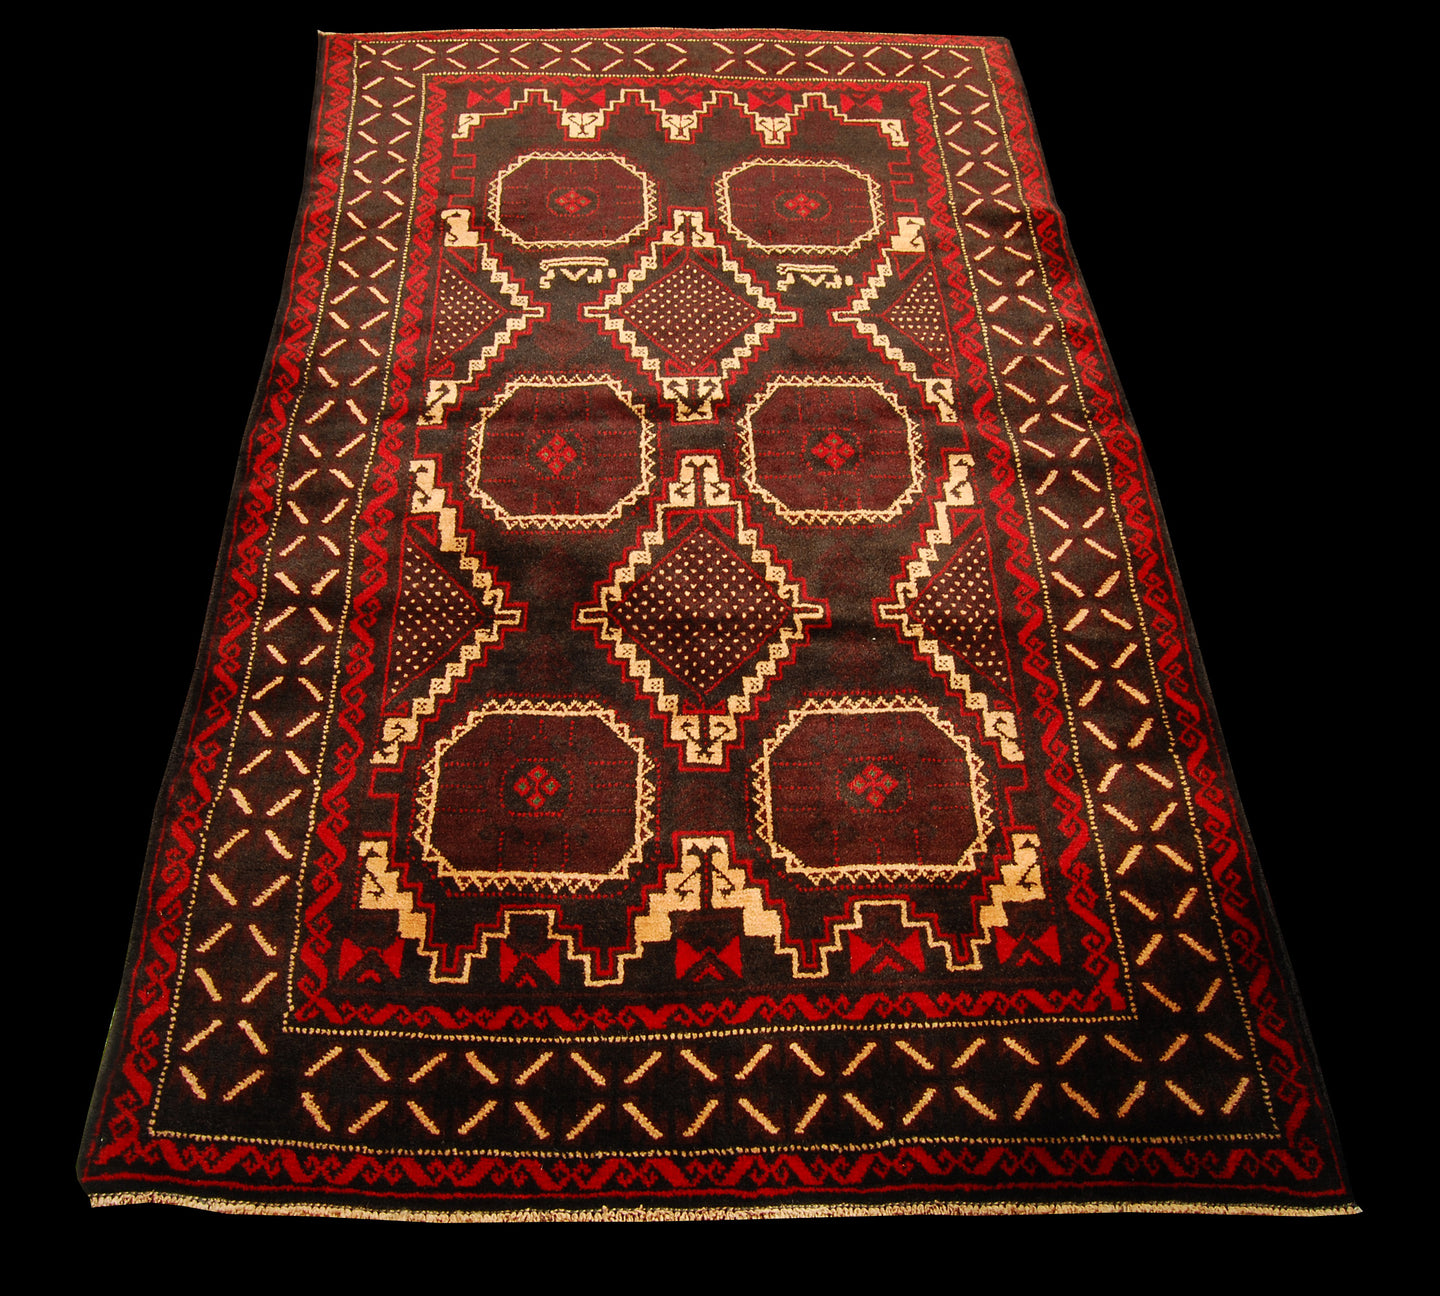 Genuine, Original Pure Wool Rug Rustic Handmad Carpet CM 188x110